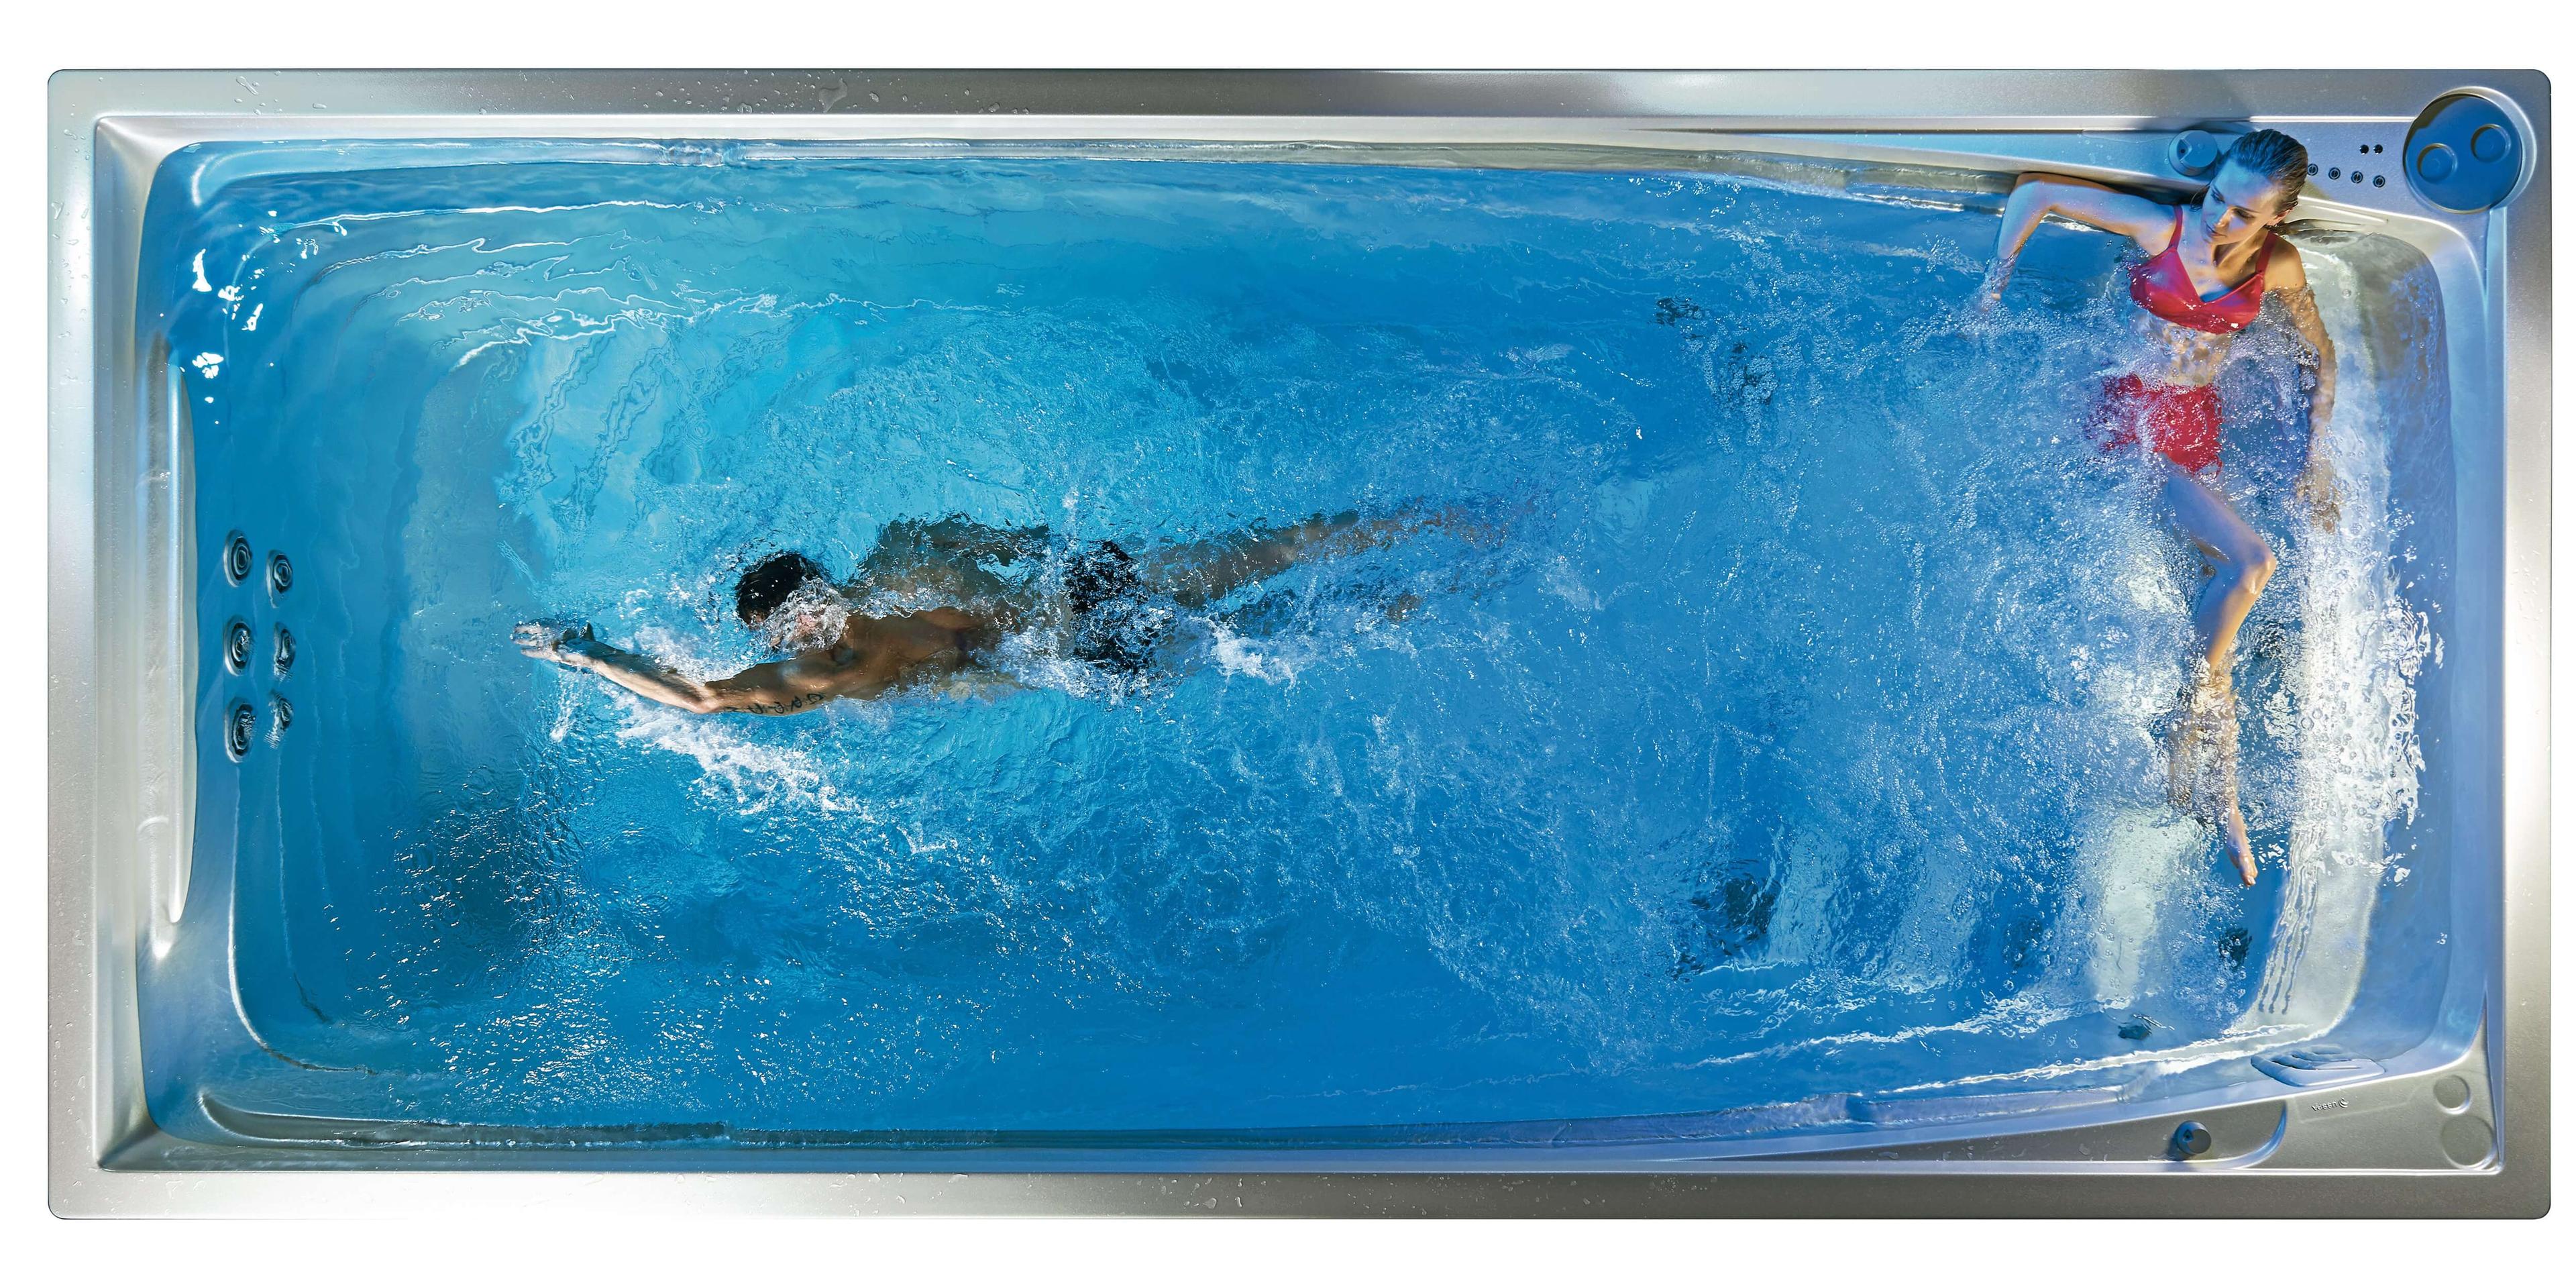 AcrySwim Hot Tub 9 image gallery